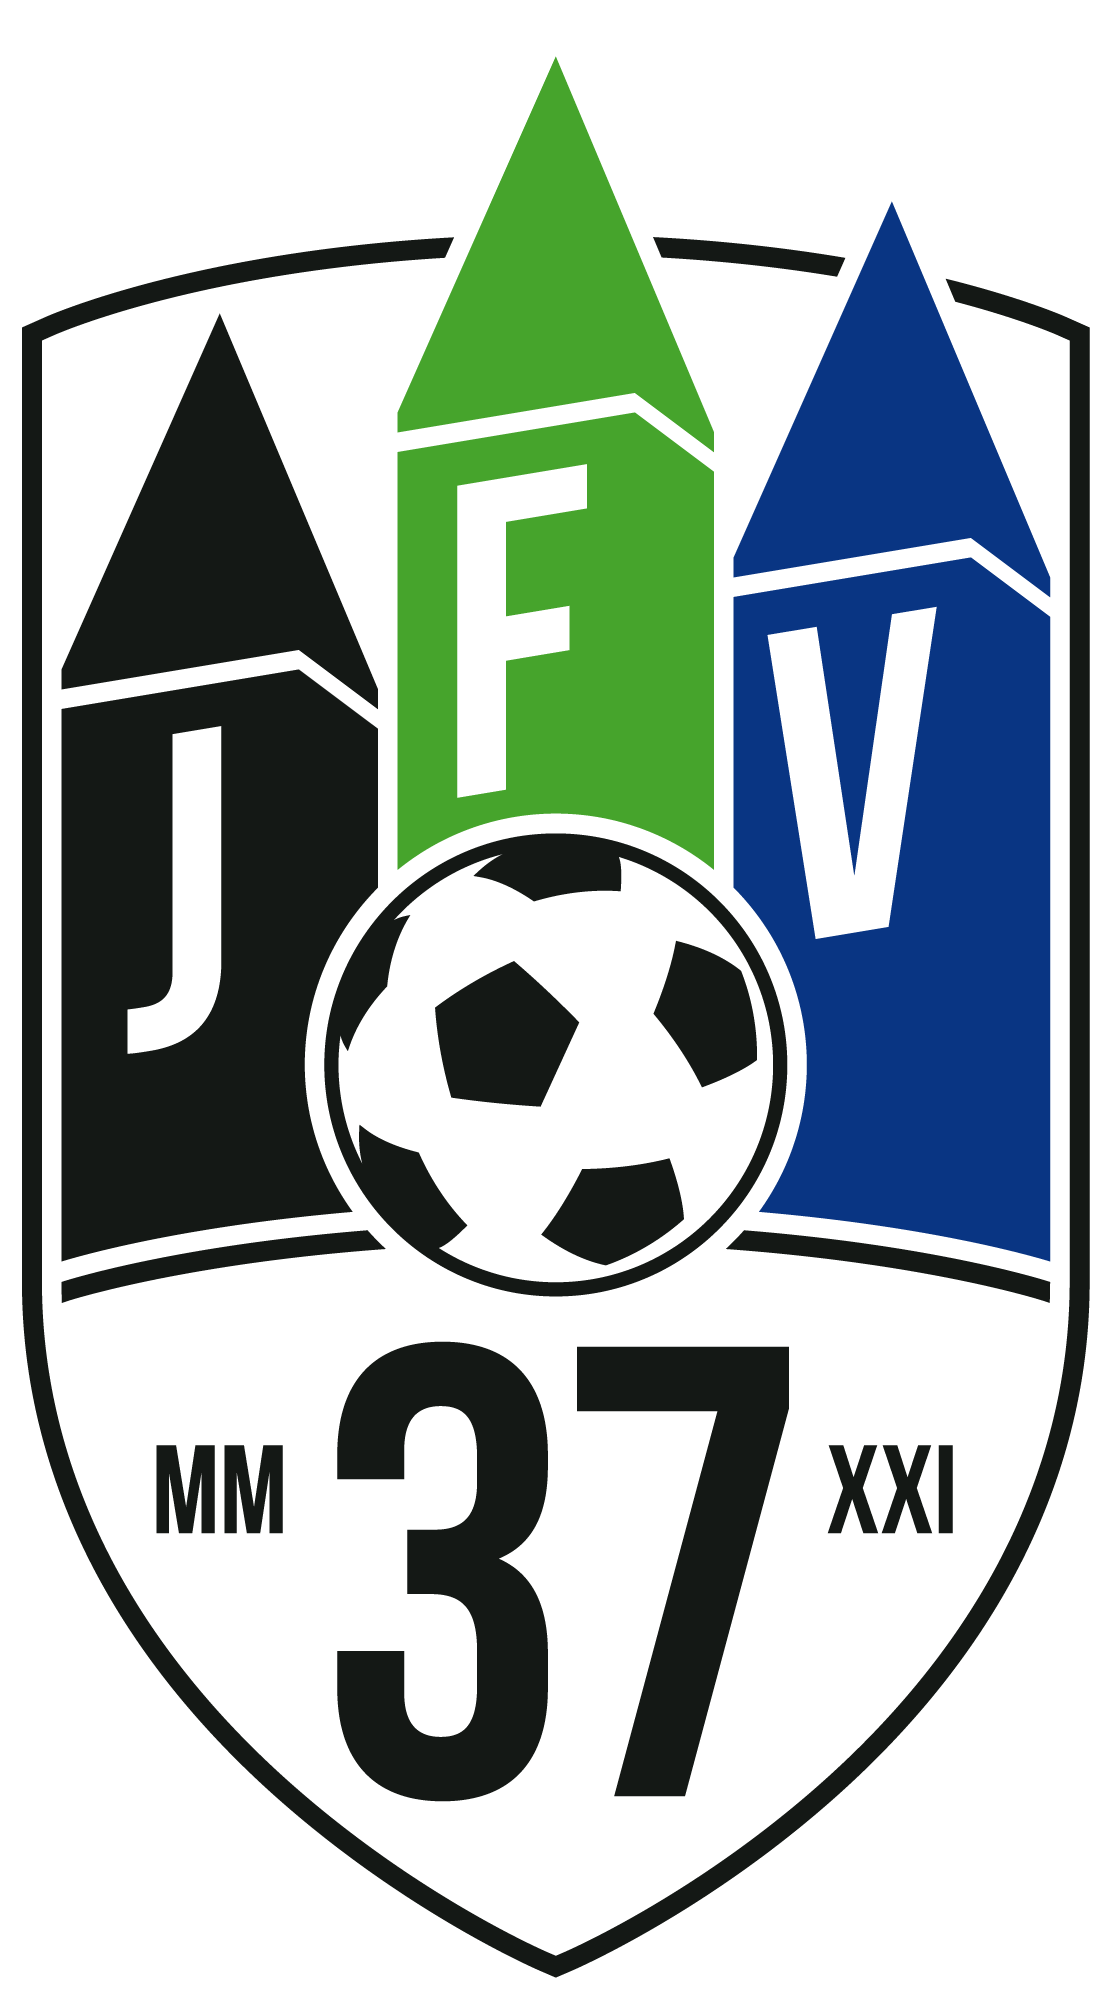 Logo JFV 37 Göttingen